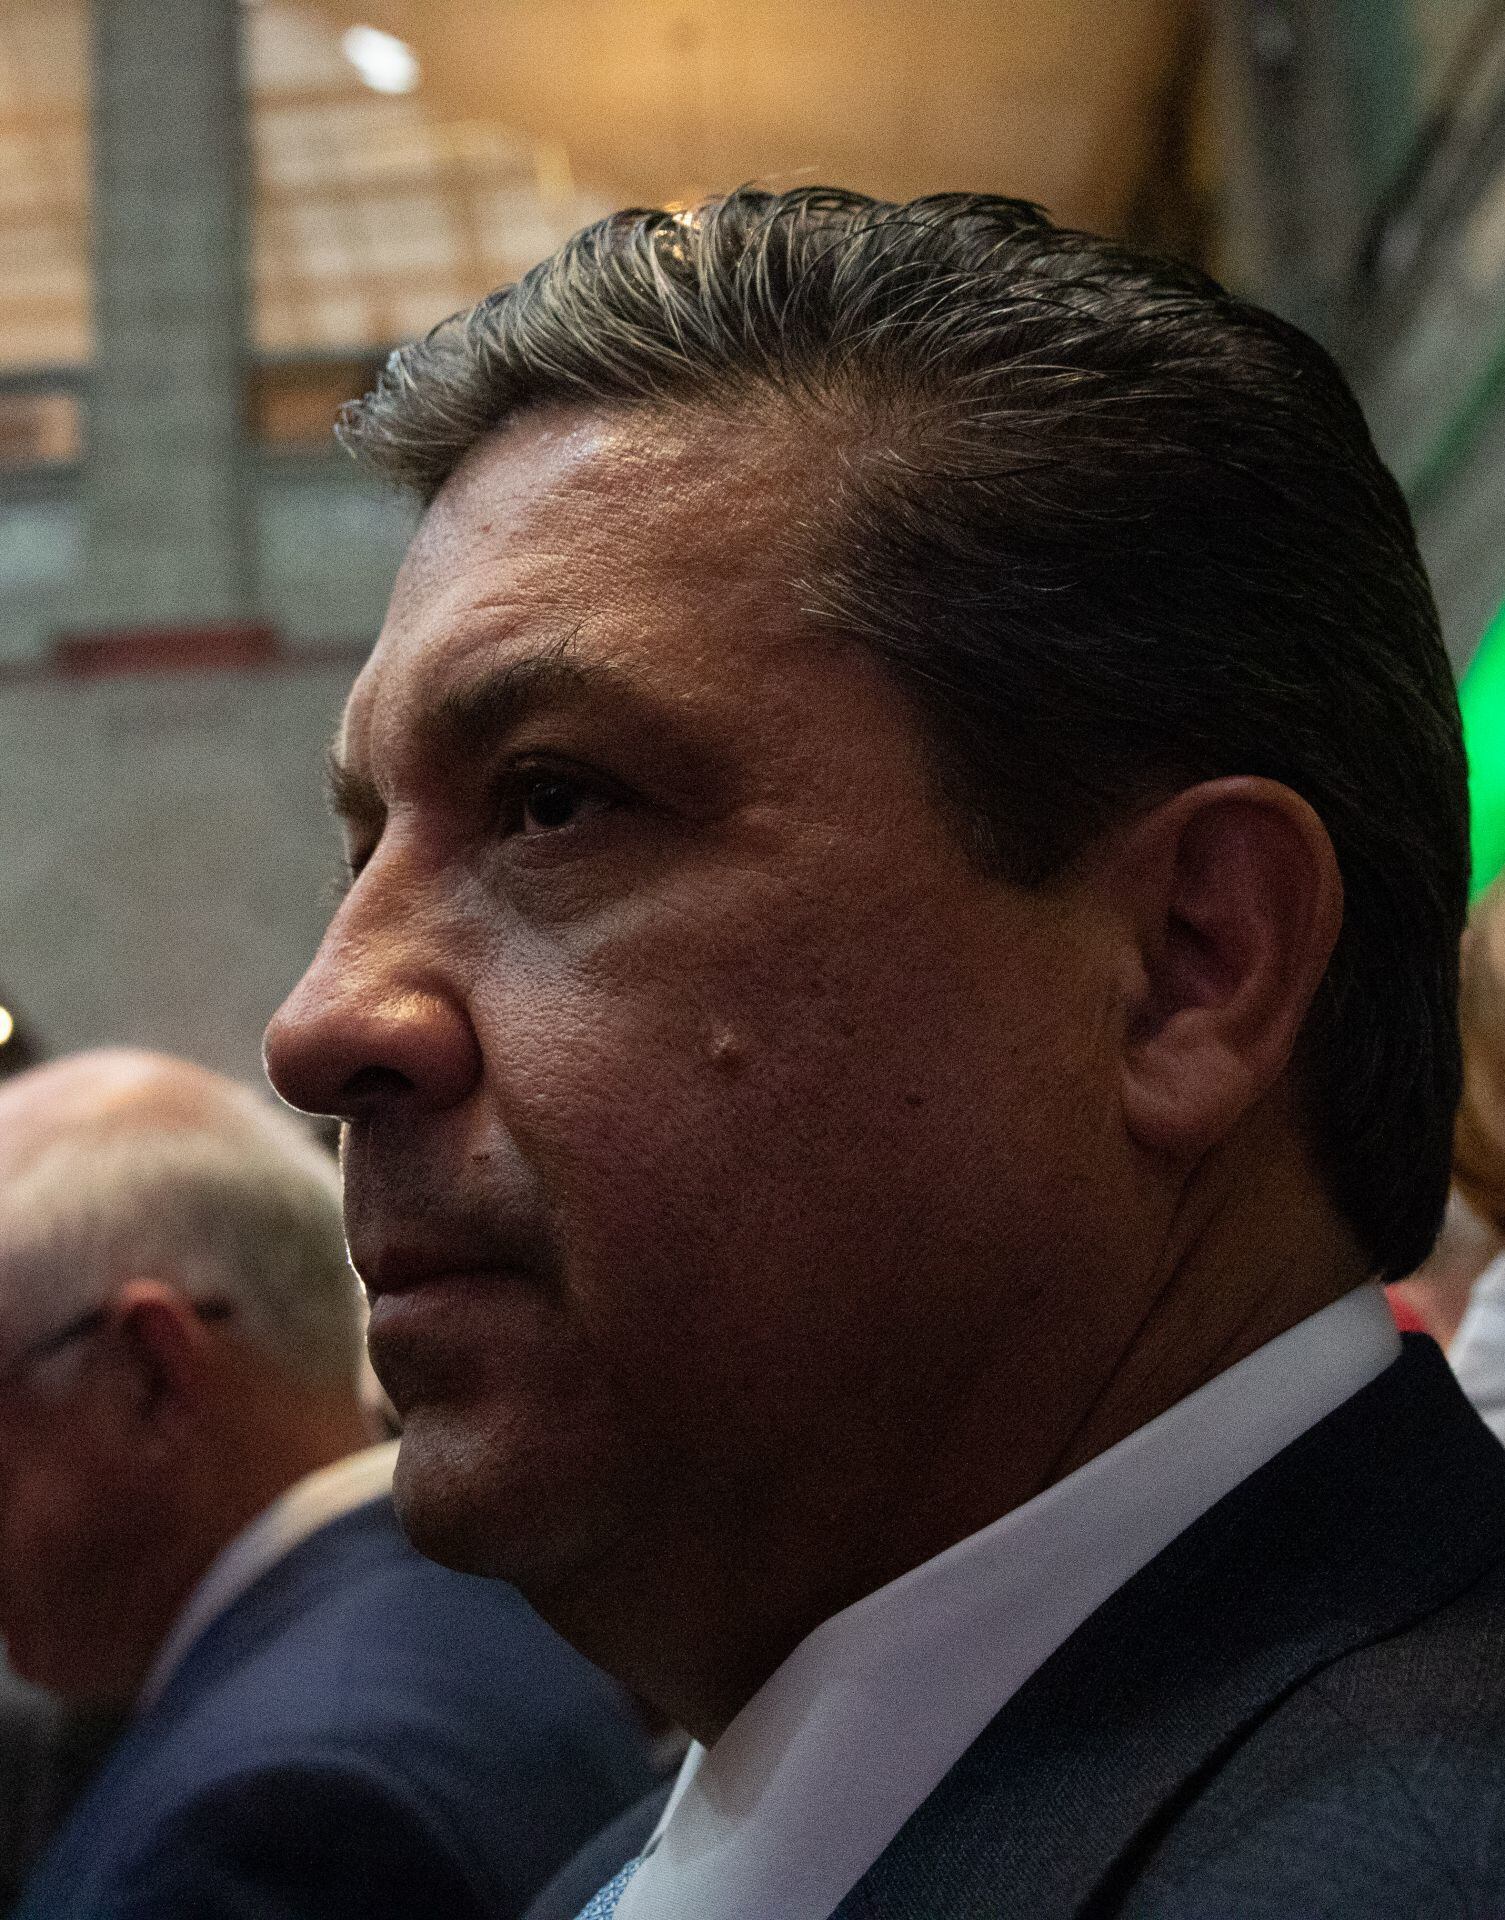 Francisco García Cabeza de Vaca, exgobernador de Tamaulipas.